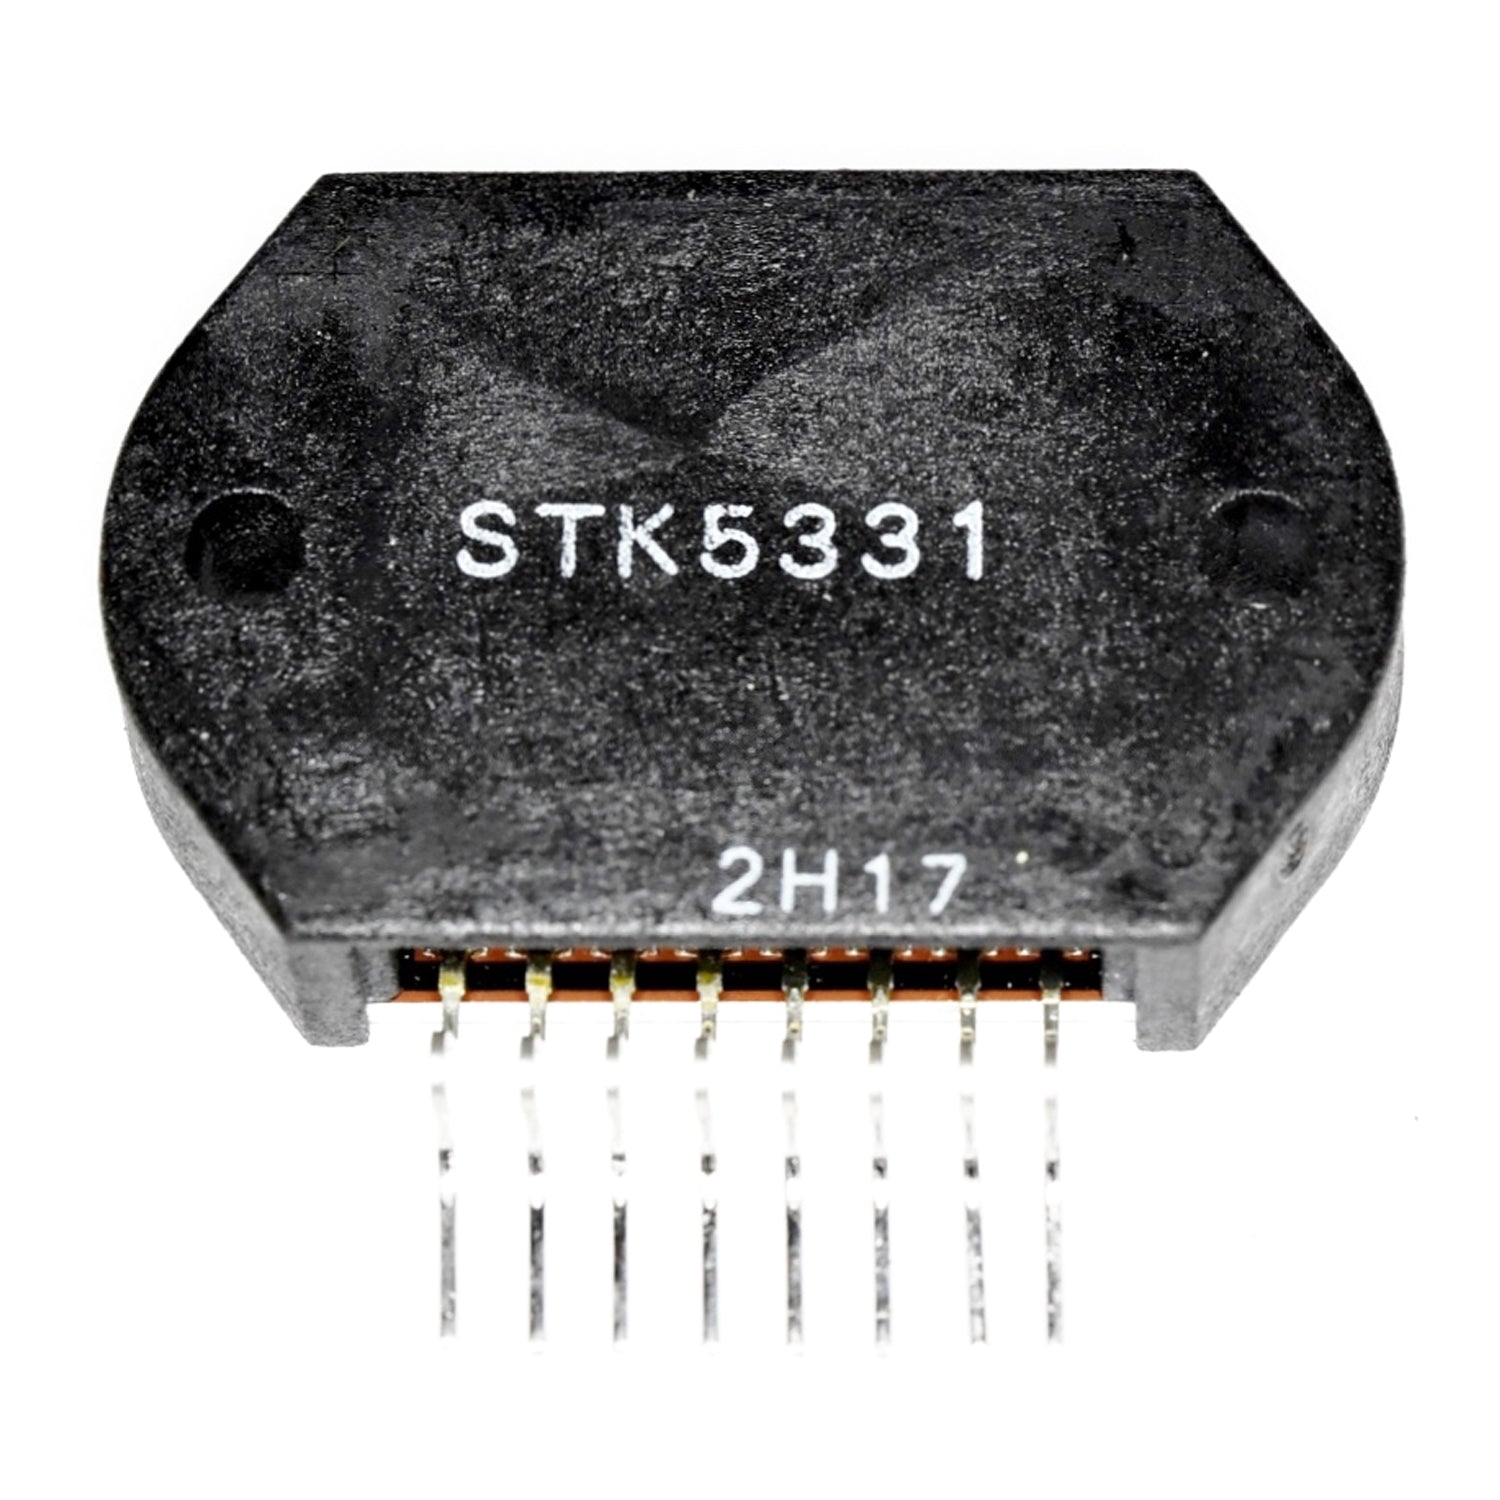 STK5331 IC SAN